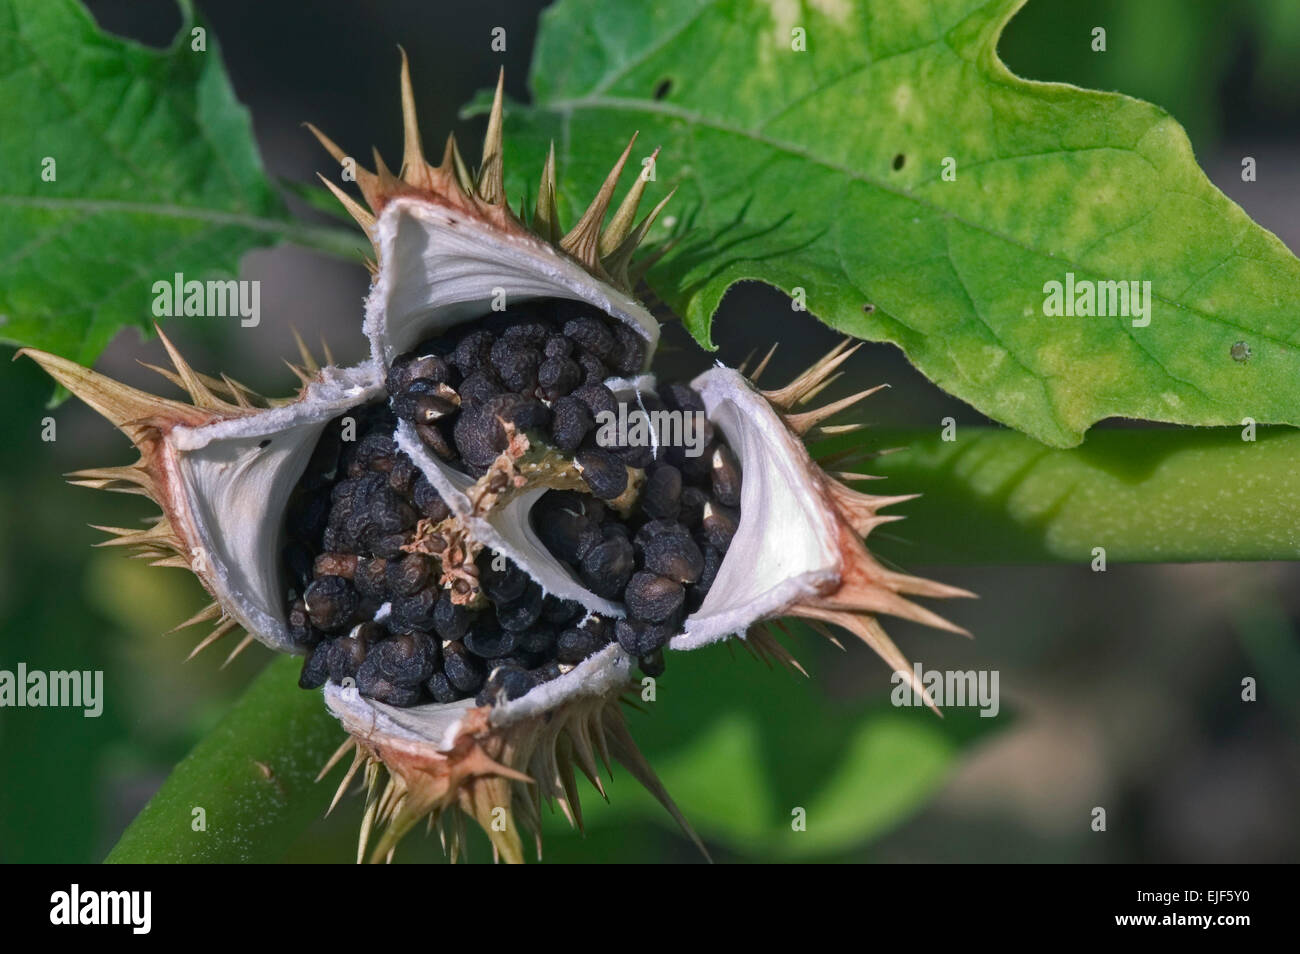 Jimson Unkraut / Teufels Snare / Stechapfel / Thornapple (Datura  Stramonium) offene Samen Kapsel bedeckt mit Stacheln mit schwarzen Samen  Stockfotografie - Alamy